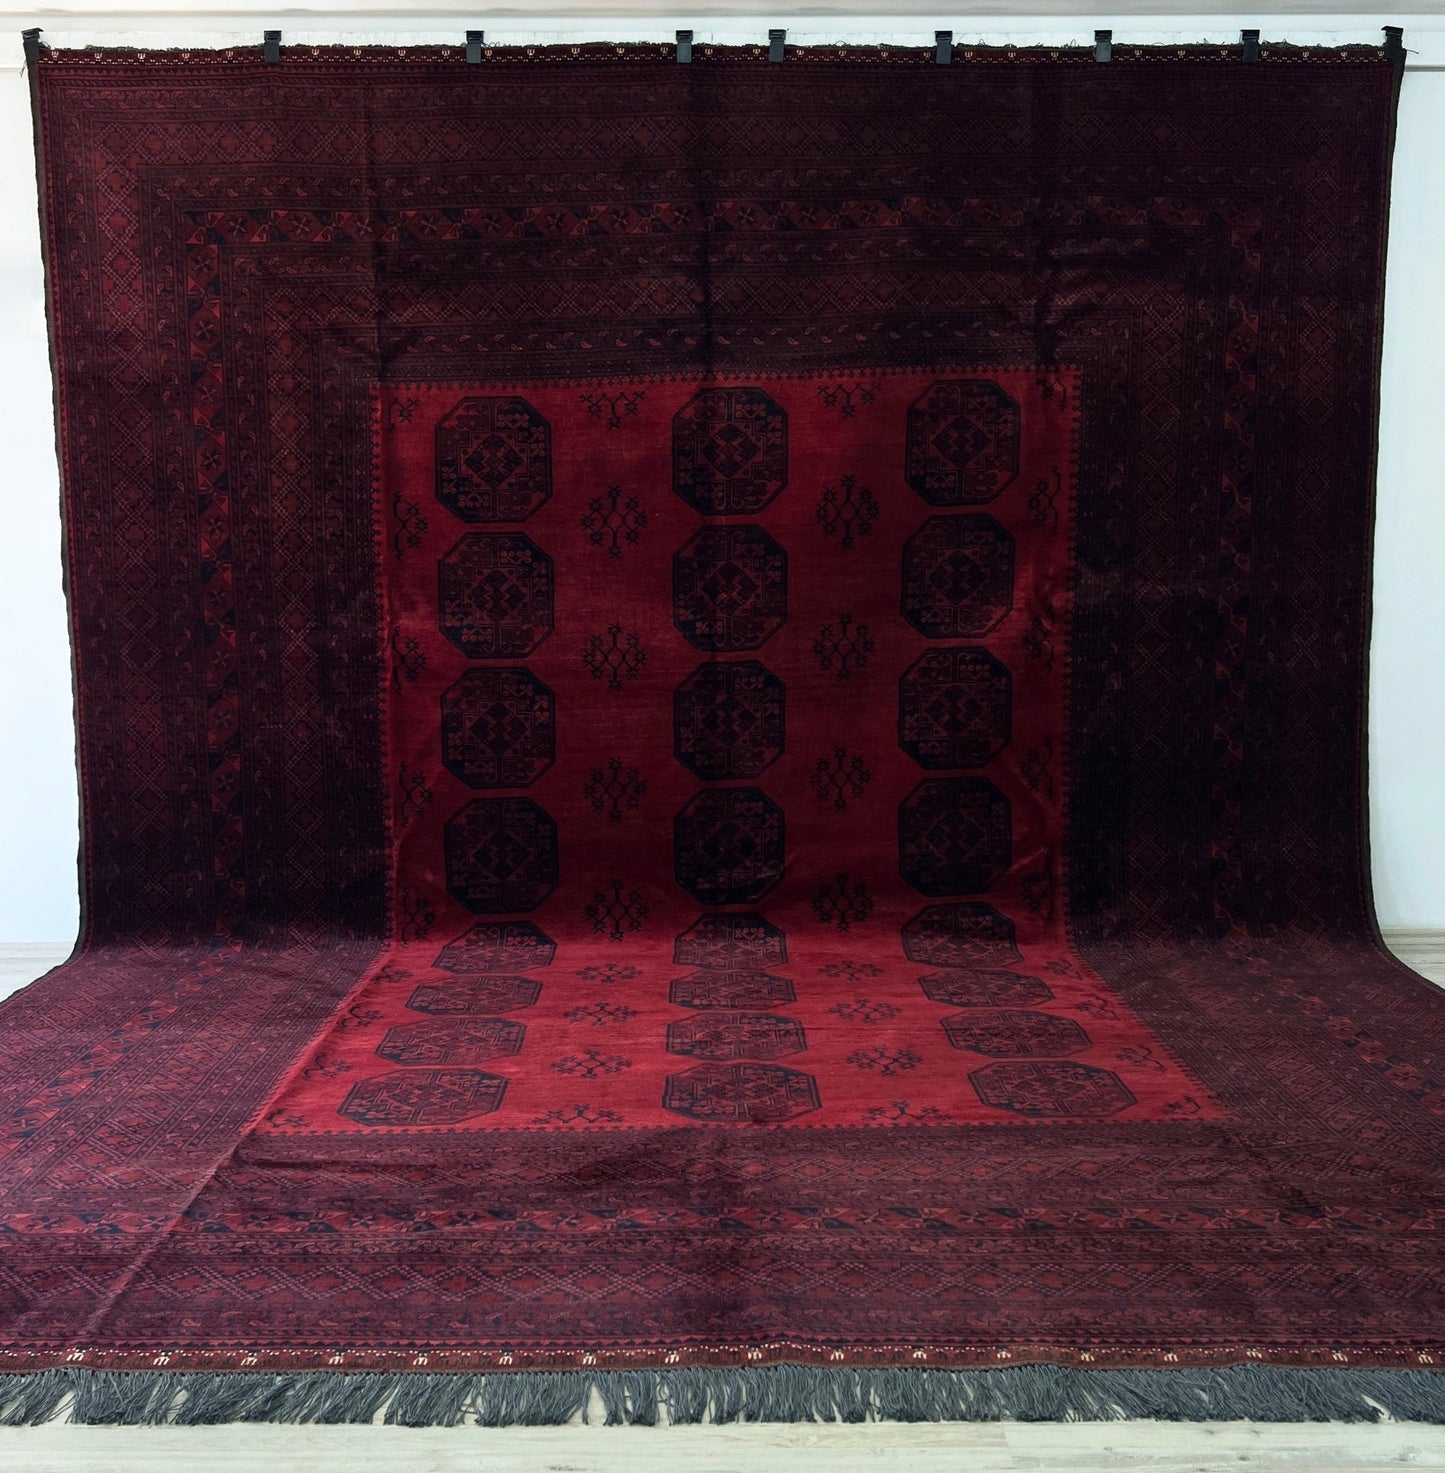 burgundry red oversized turkmen ersari elephant foot rug shop san francisco bay area. large oriental rug palo alto berkeley